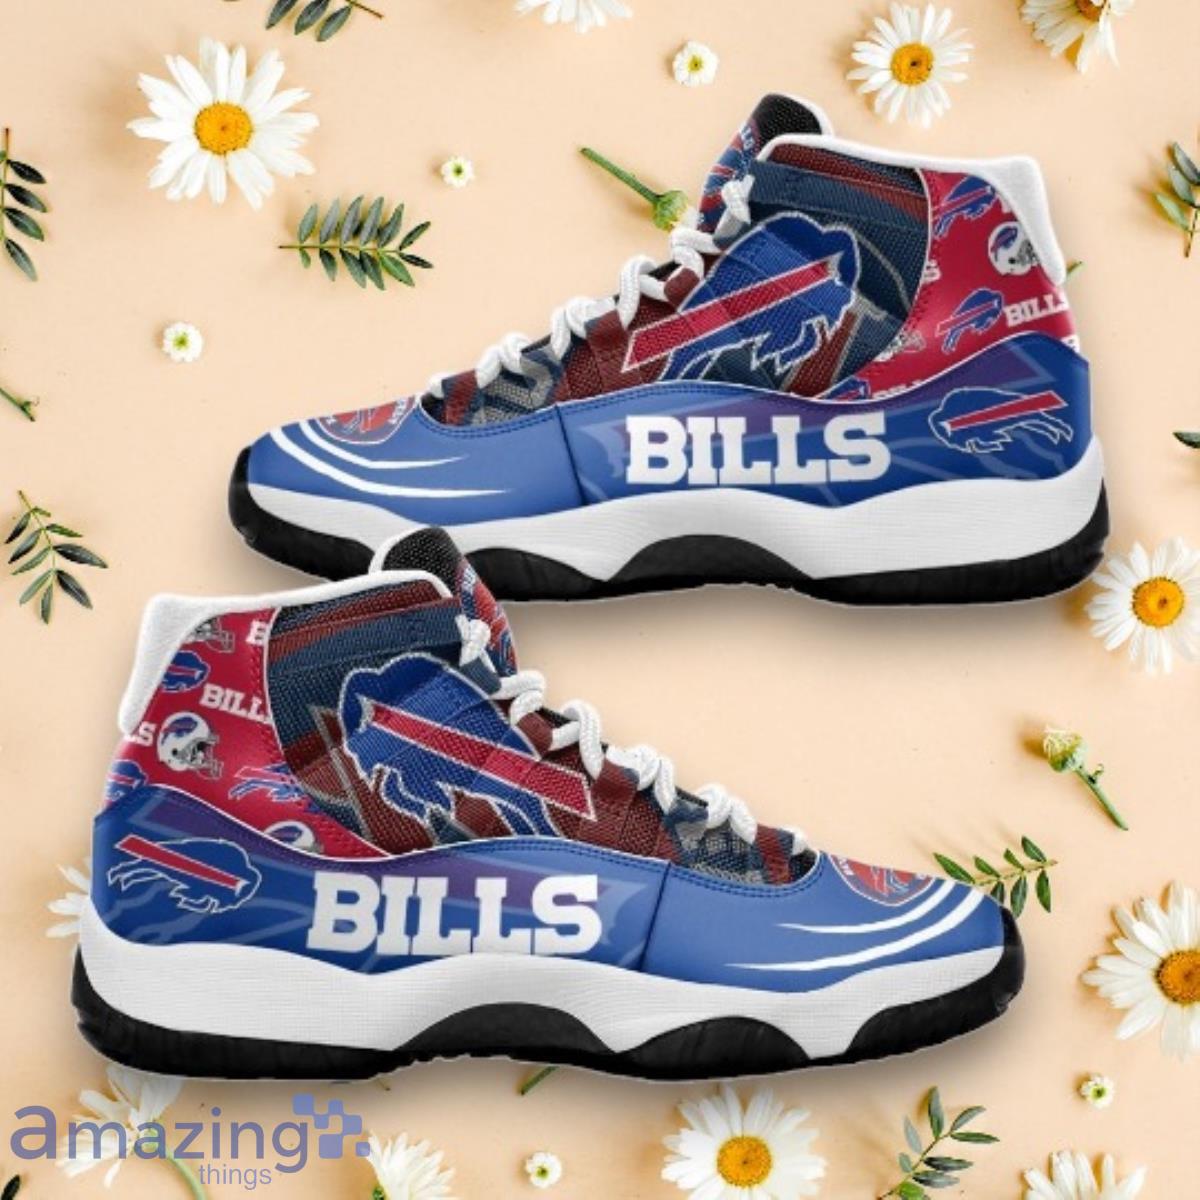 Buffalo Bills Air Jordan 11 Sneakers Style Gift For Men Women Product Photo 1